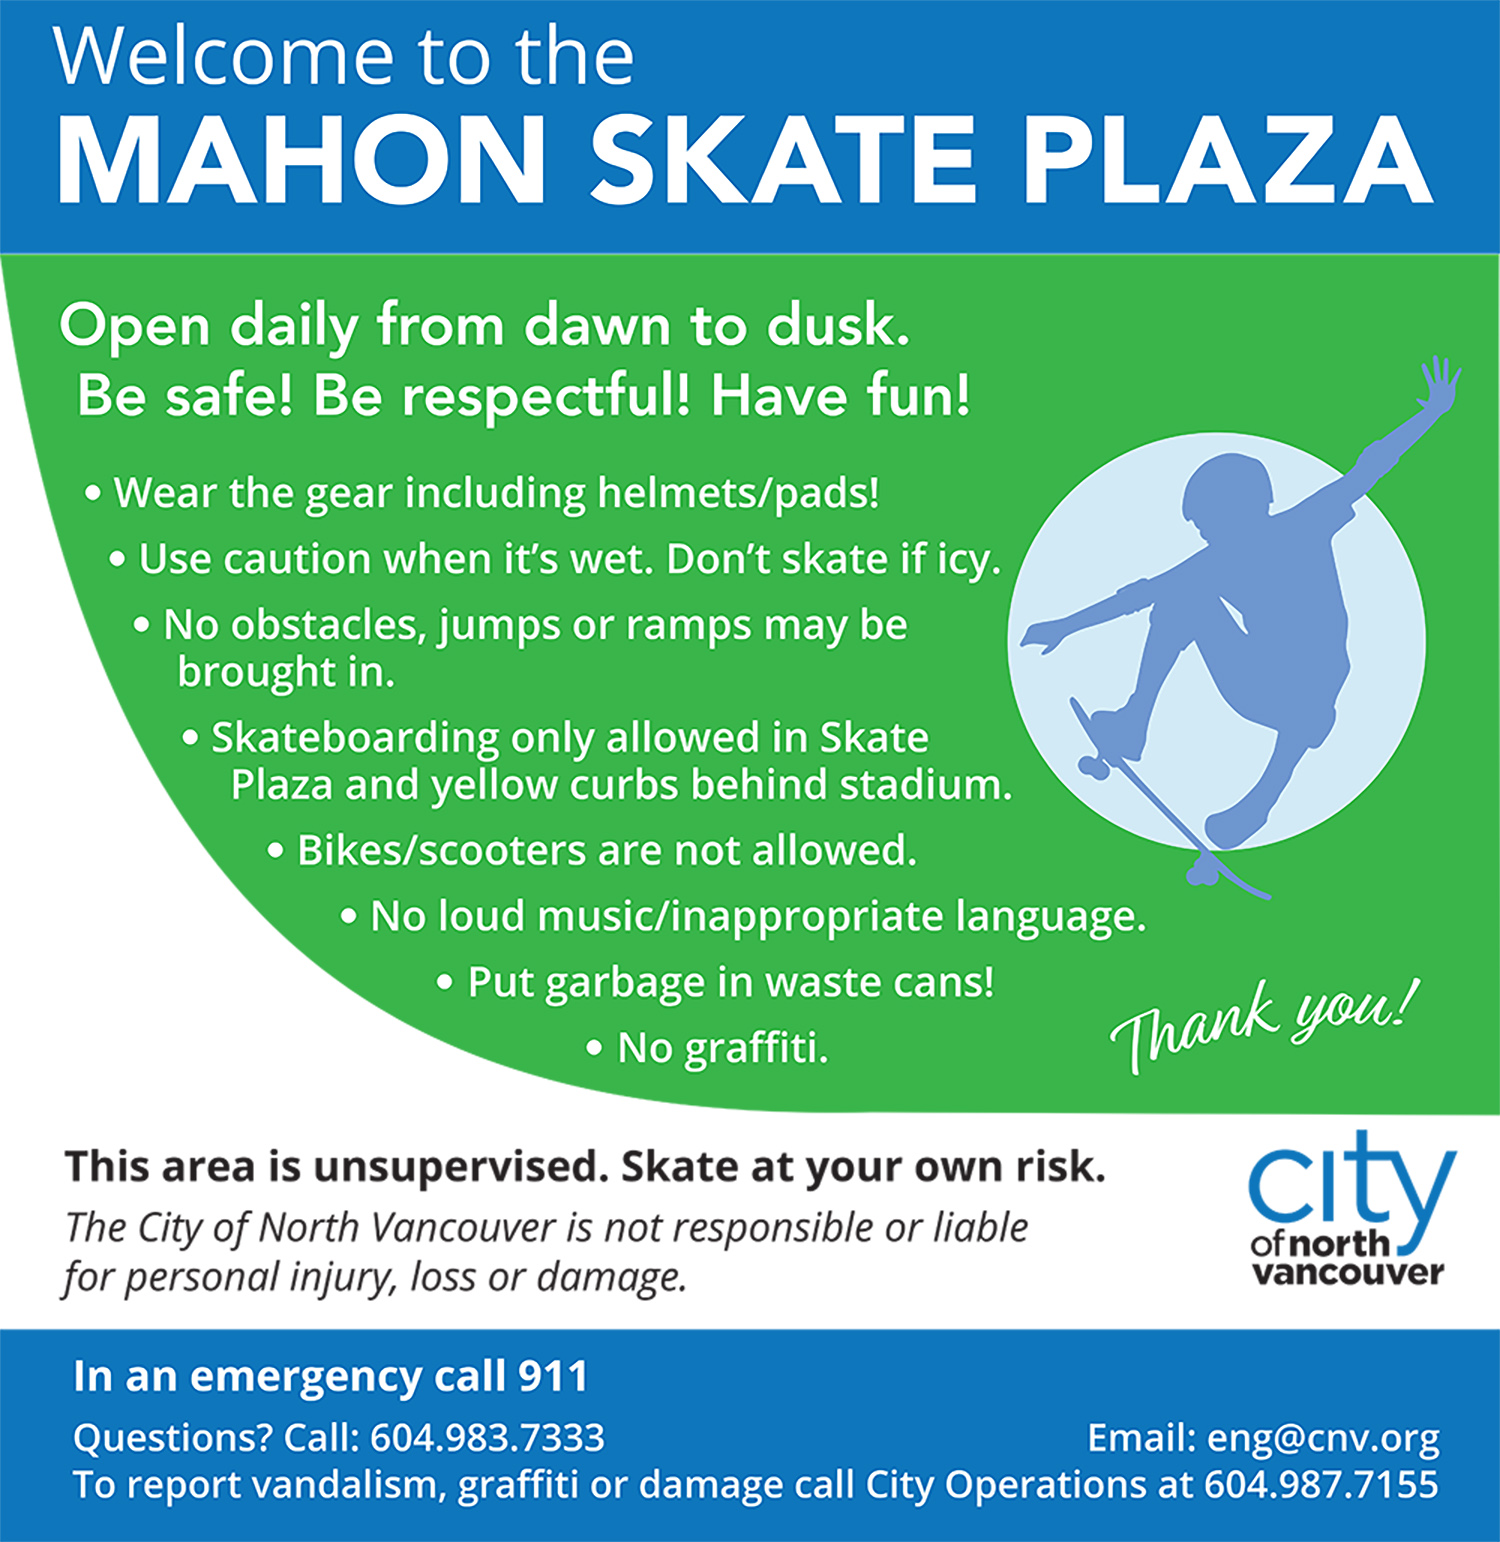 Rules of Mahon Skate Plaza